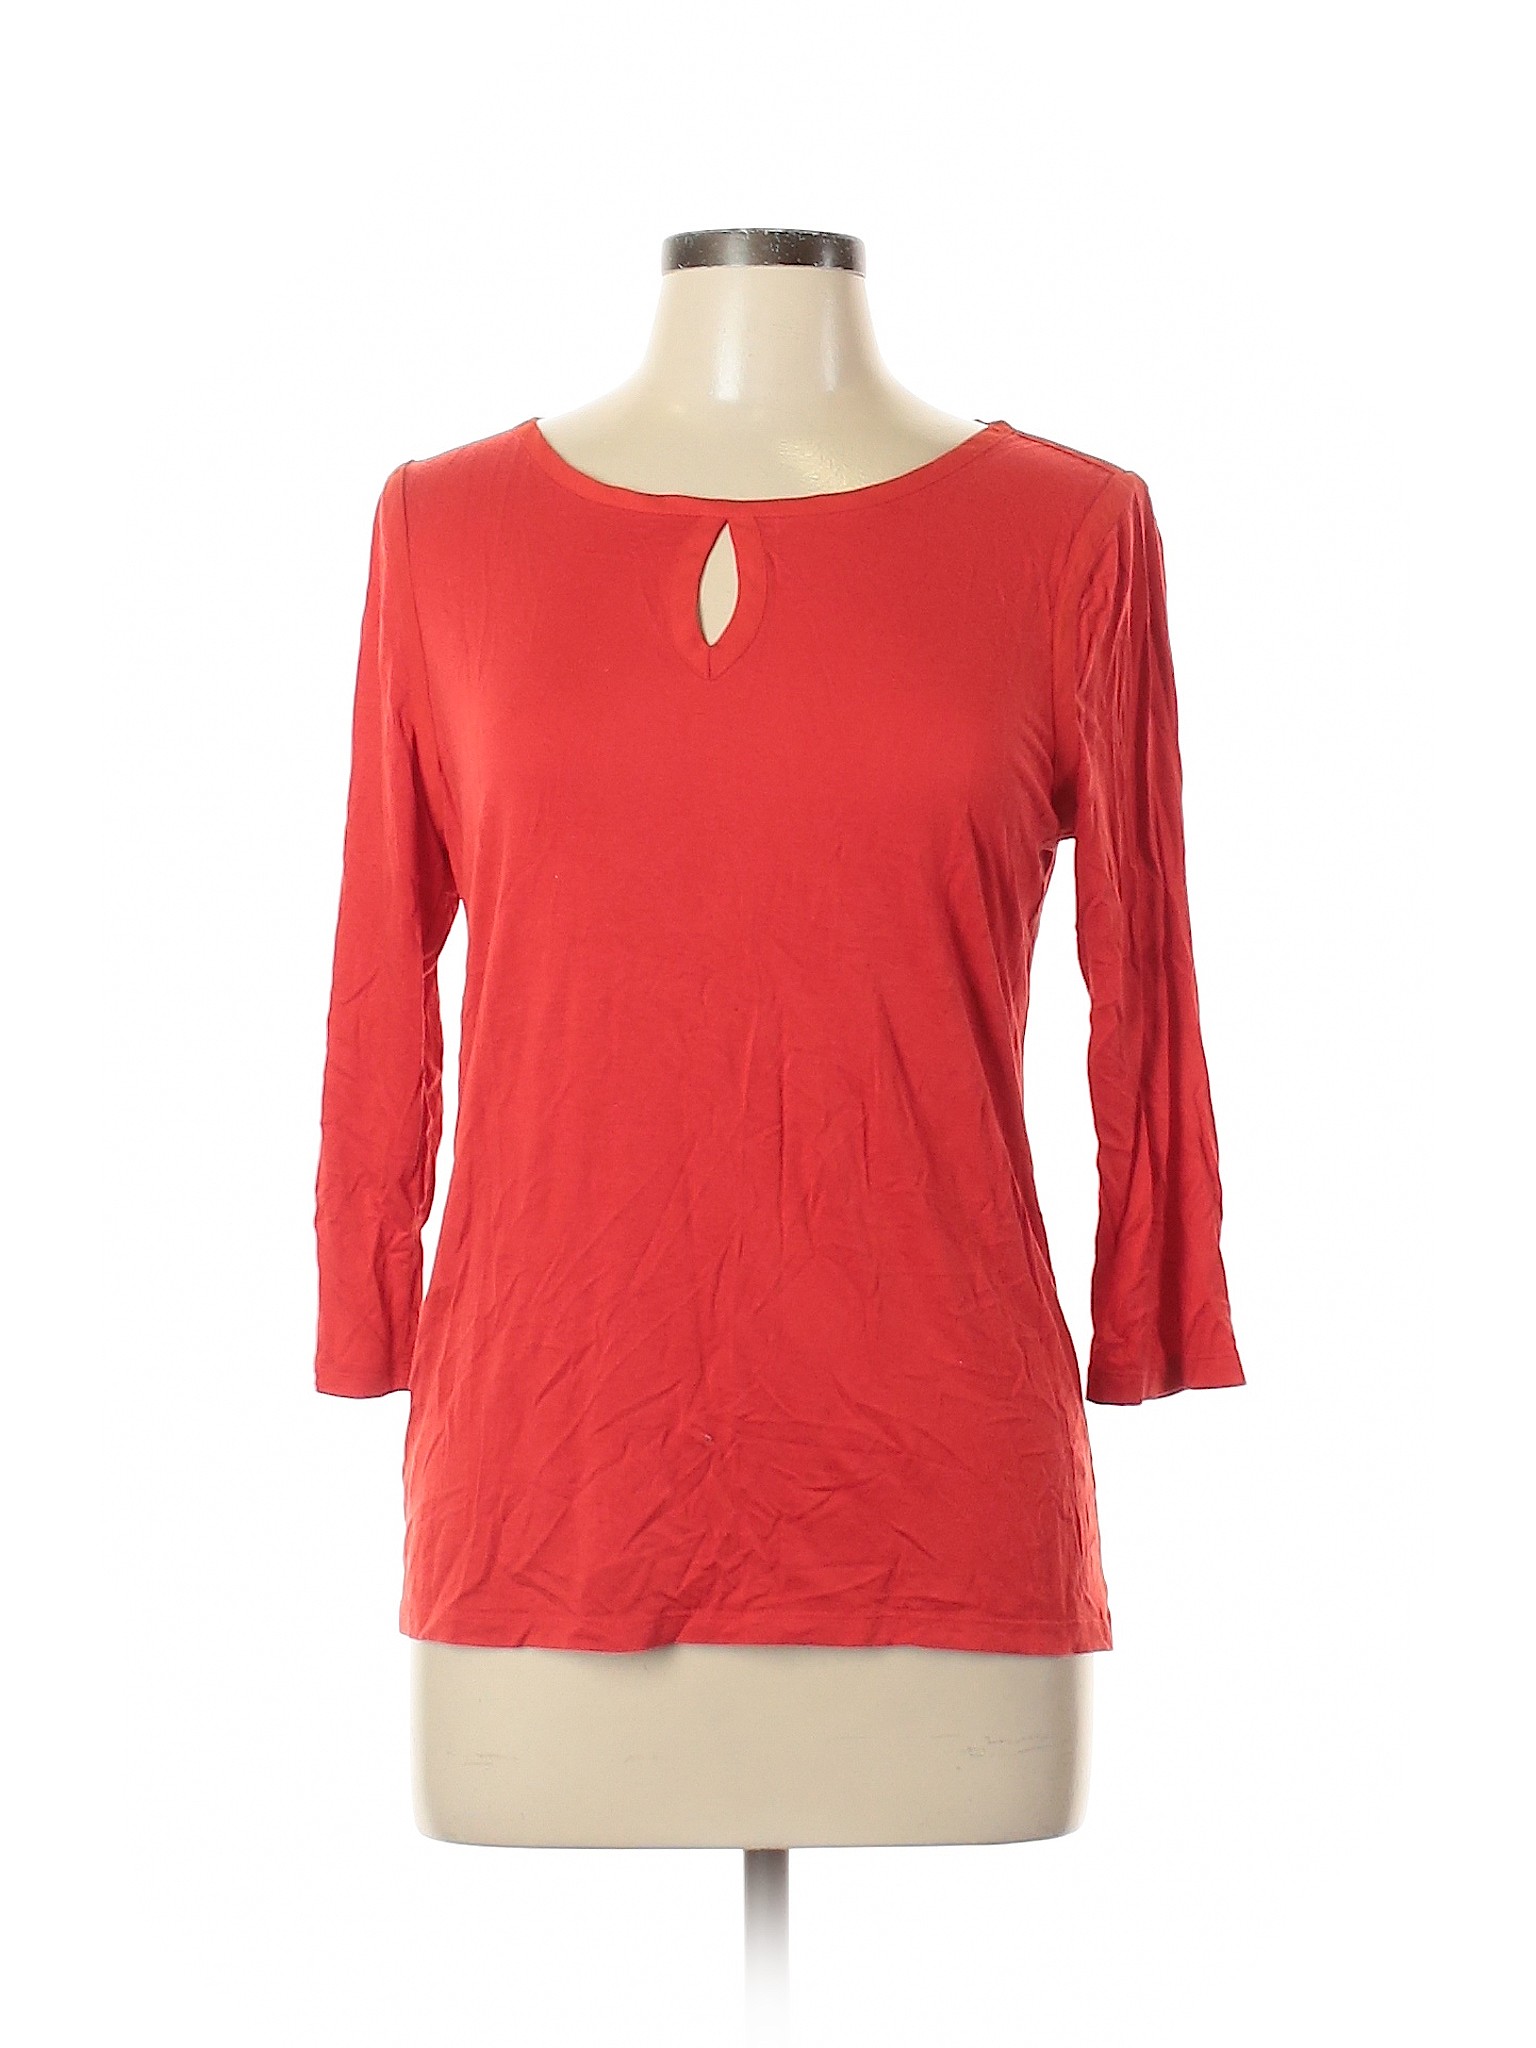 Ann Taylor Women Red 3/4 Sleeve Top L | eBay